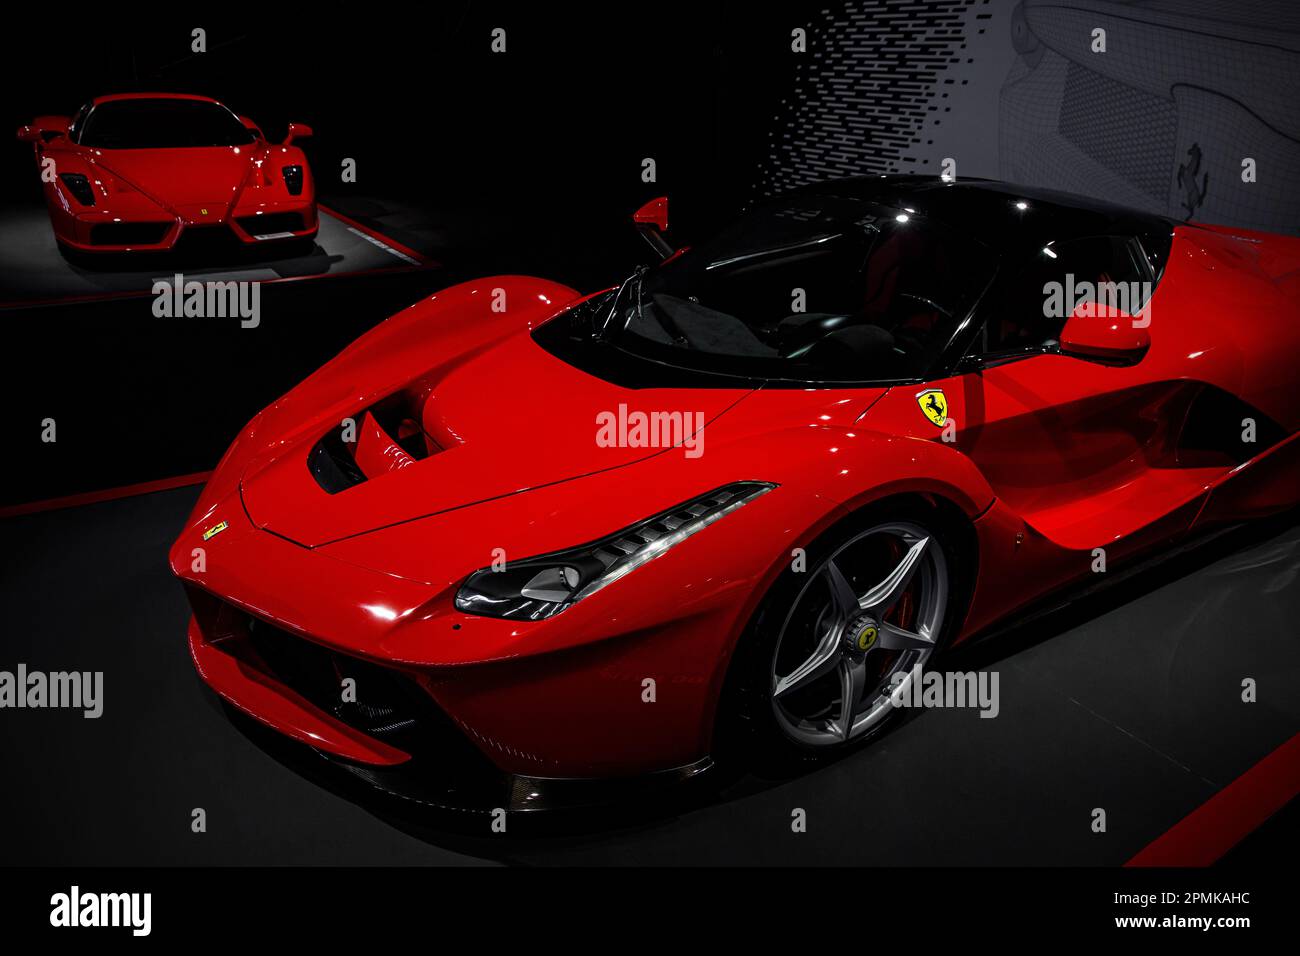 https://c8.alamy.com/comp/2PMKAHC/maranello-italy-april-01-2023-luxury-stylish-ferrari-red-supercar-on-dark-background-2PMKAHC.jpg